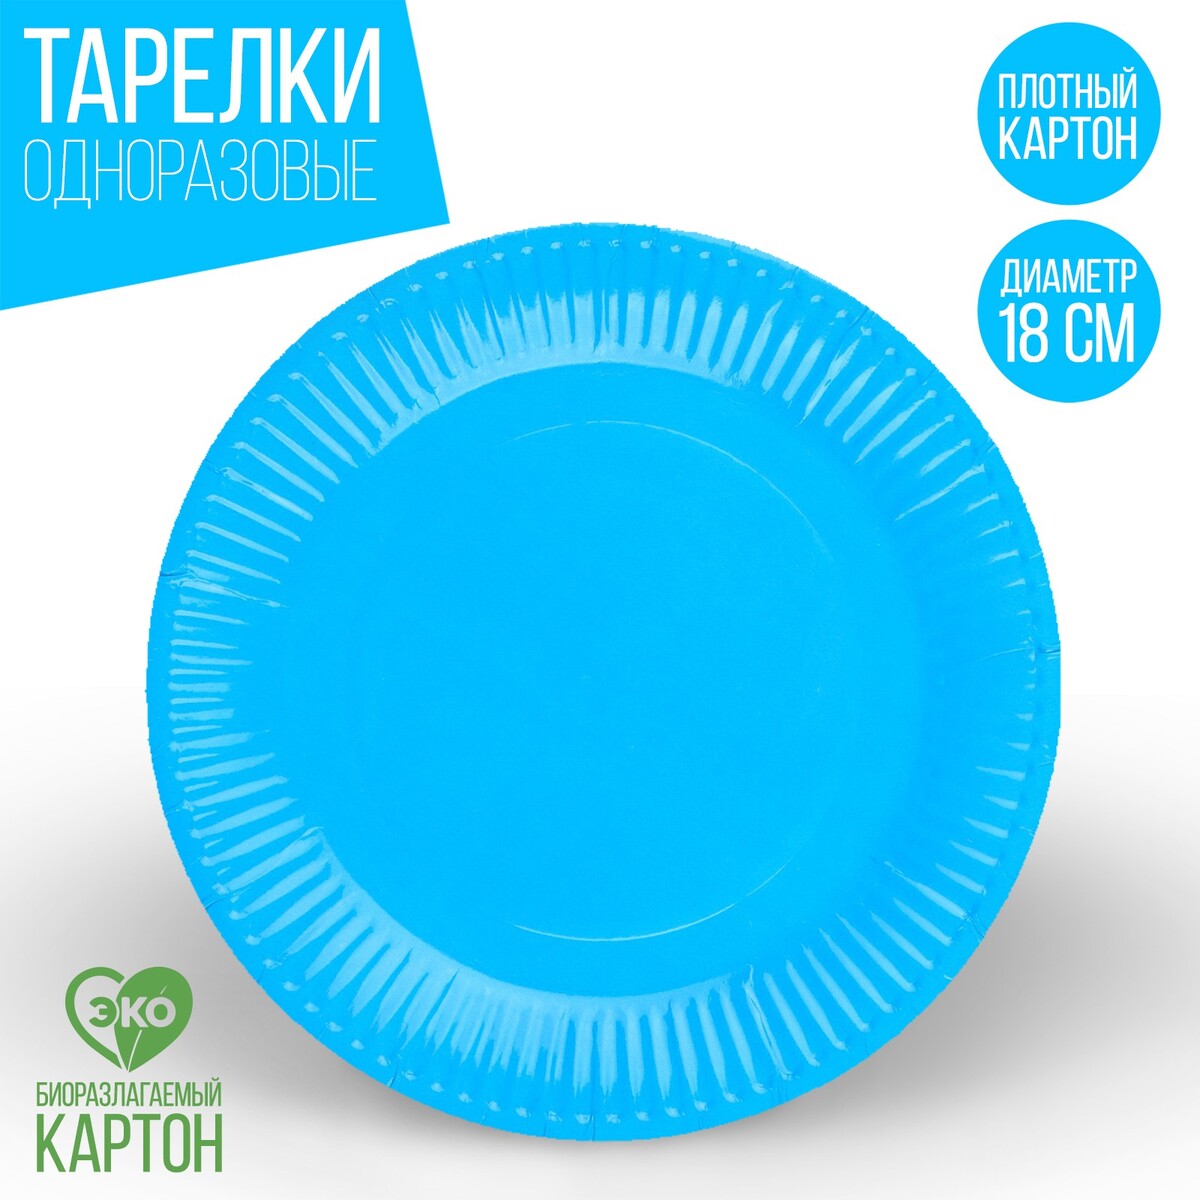 Тарелка одноразовая бумажная однотонная, голубой цвет 18 см, набор 10 штук бумажная растушёвка сонет 8 штук